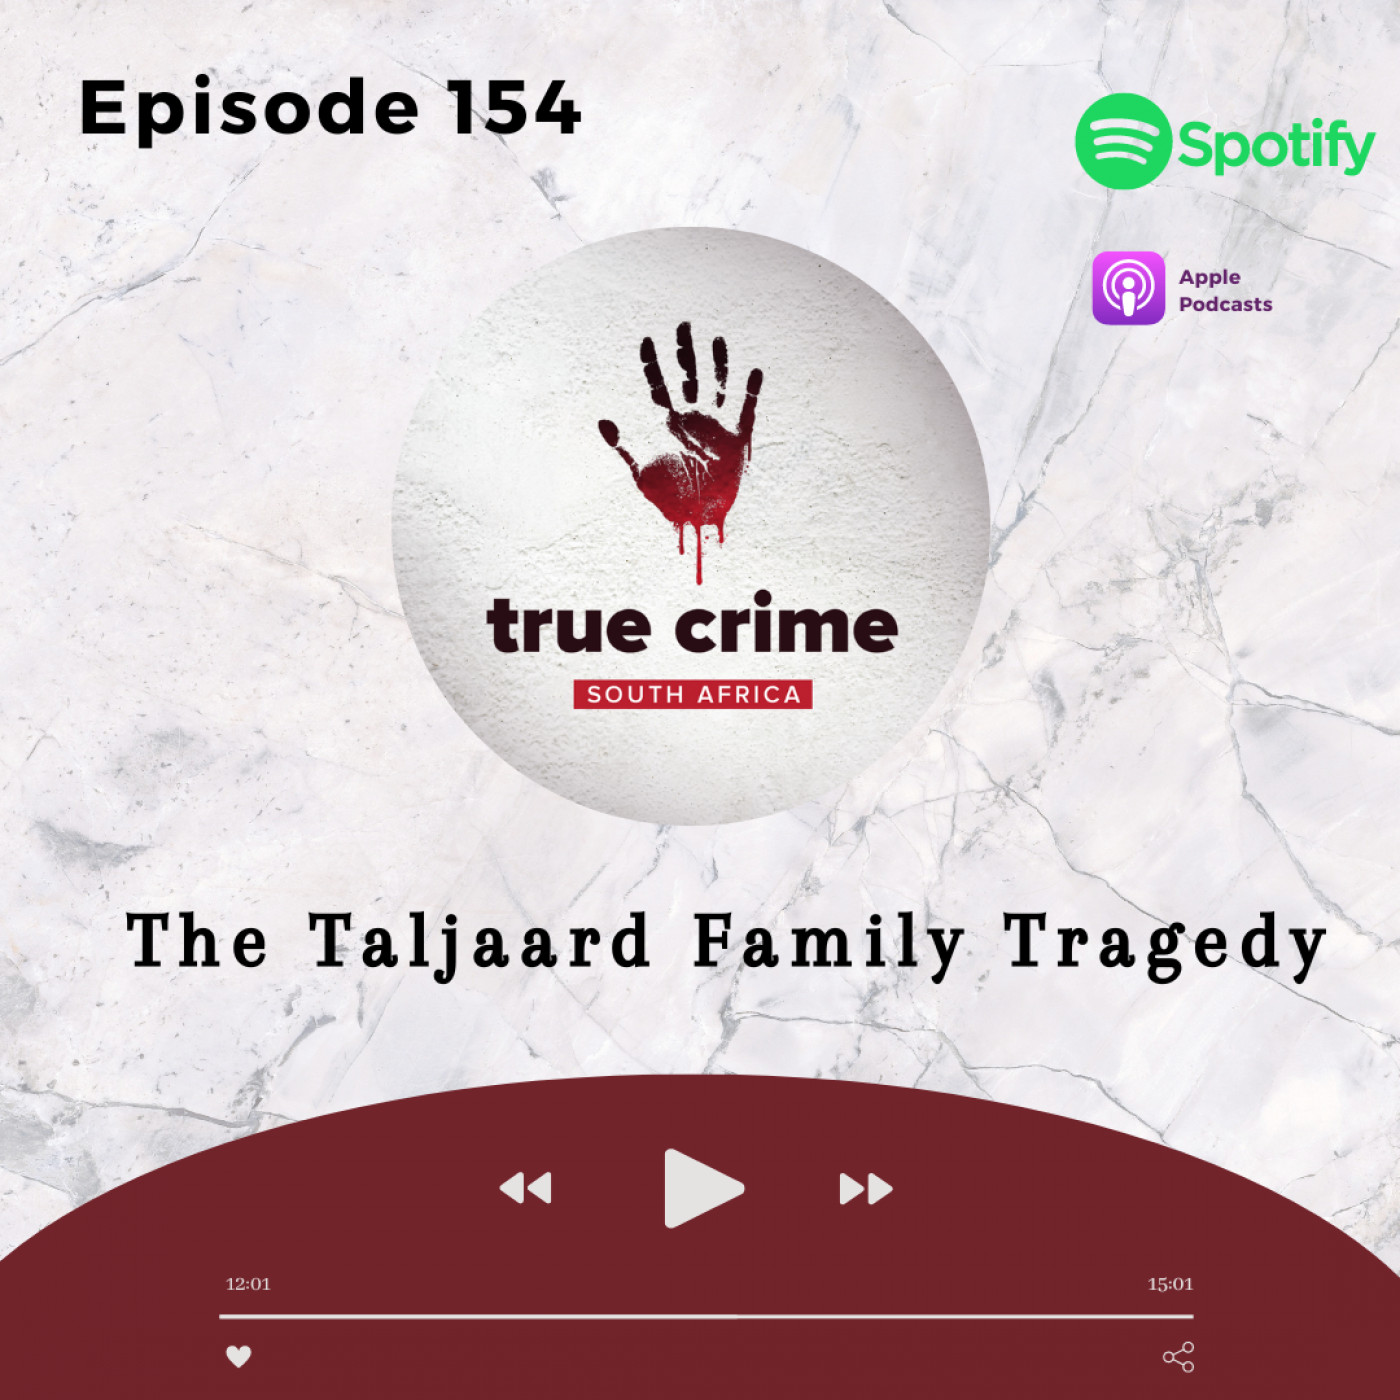 Episode 154 The Taljaard Family Tragedy